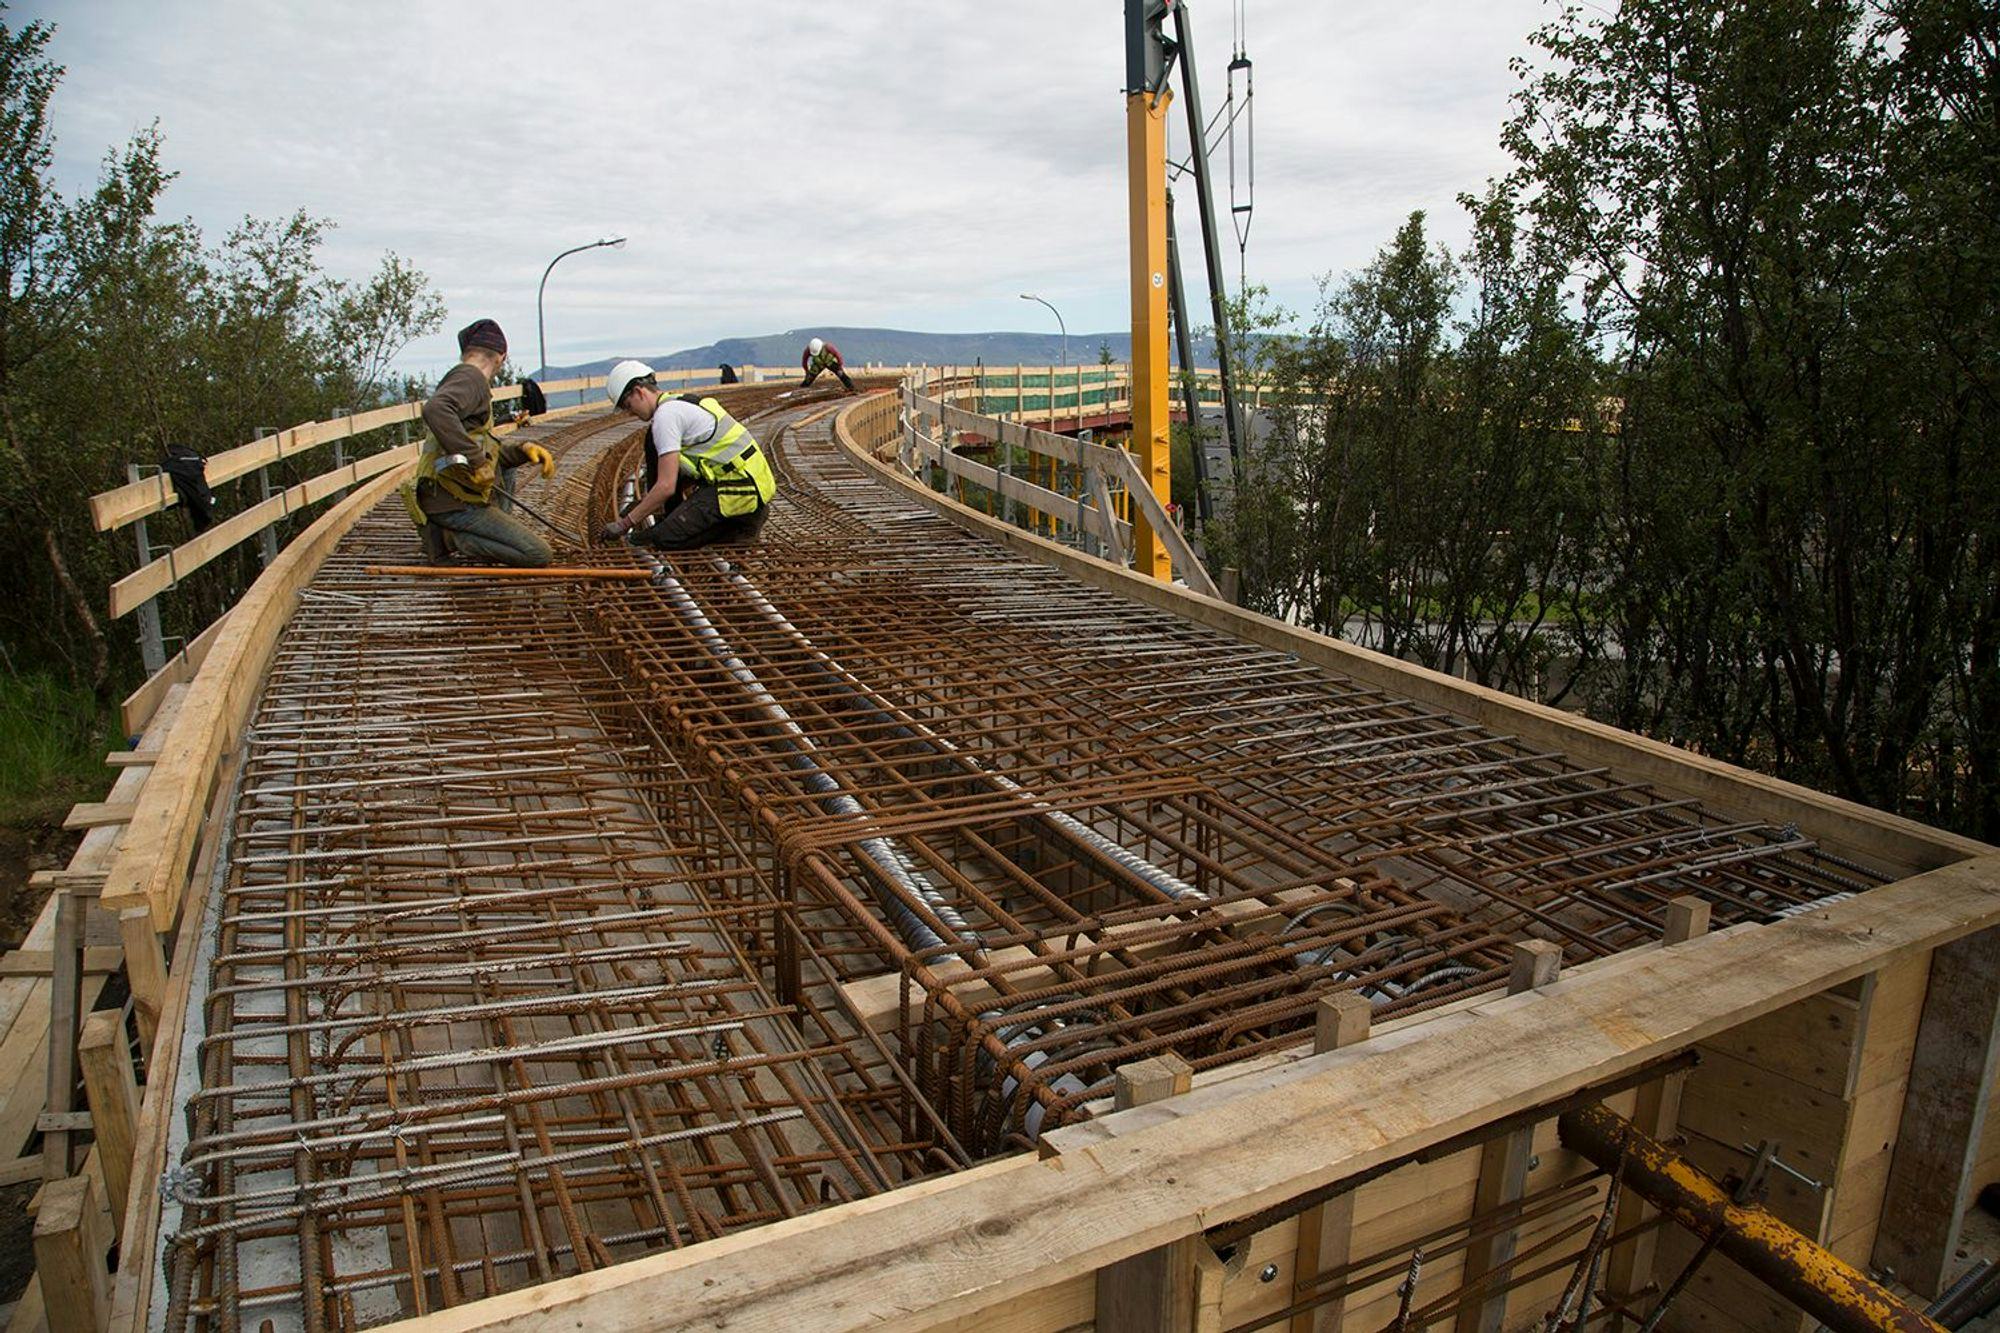 construction workers on a bridge focusing on rebar framework